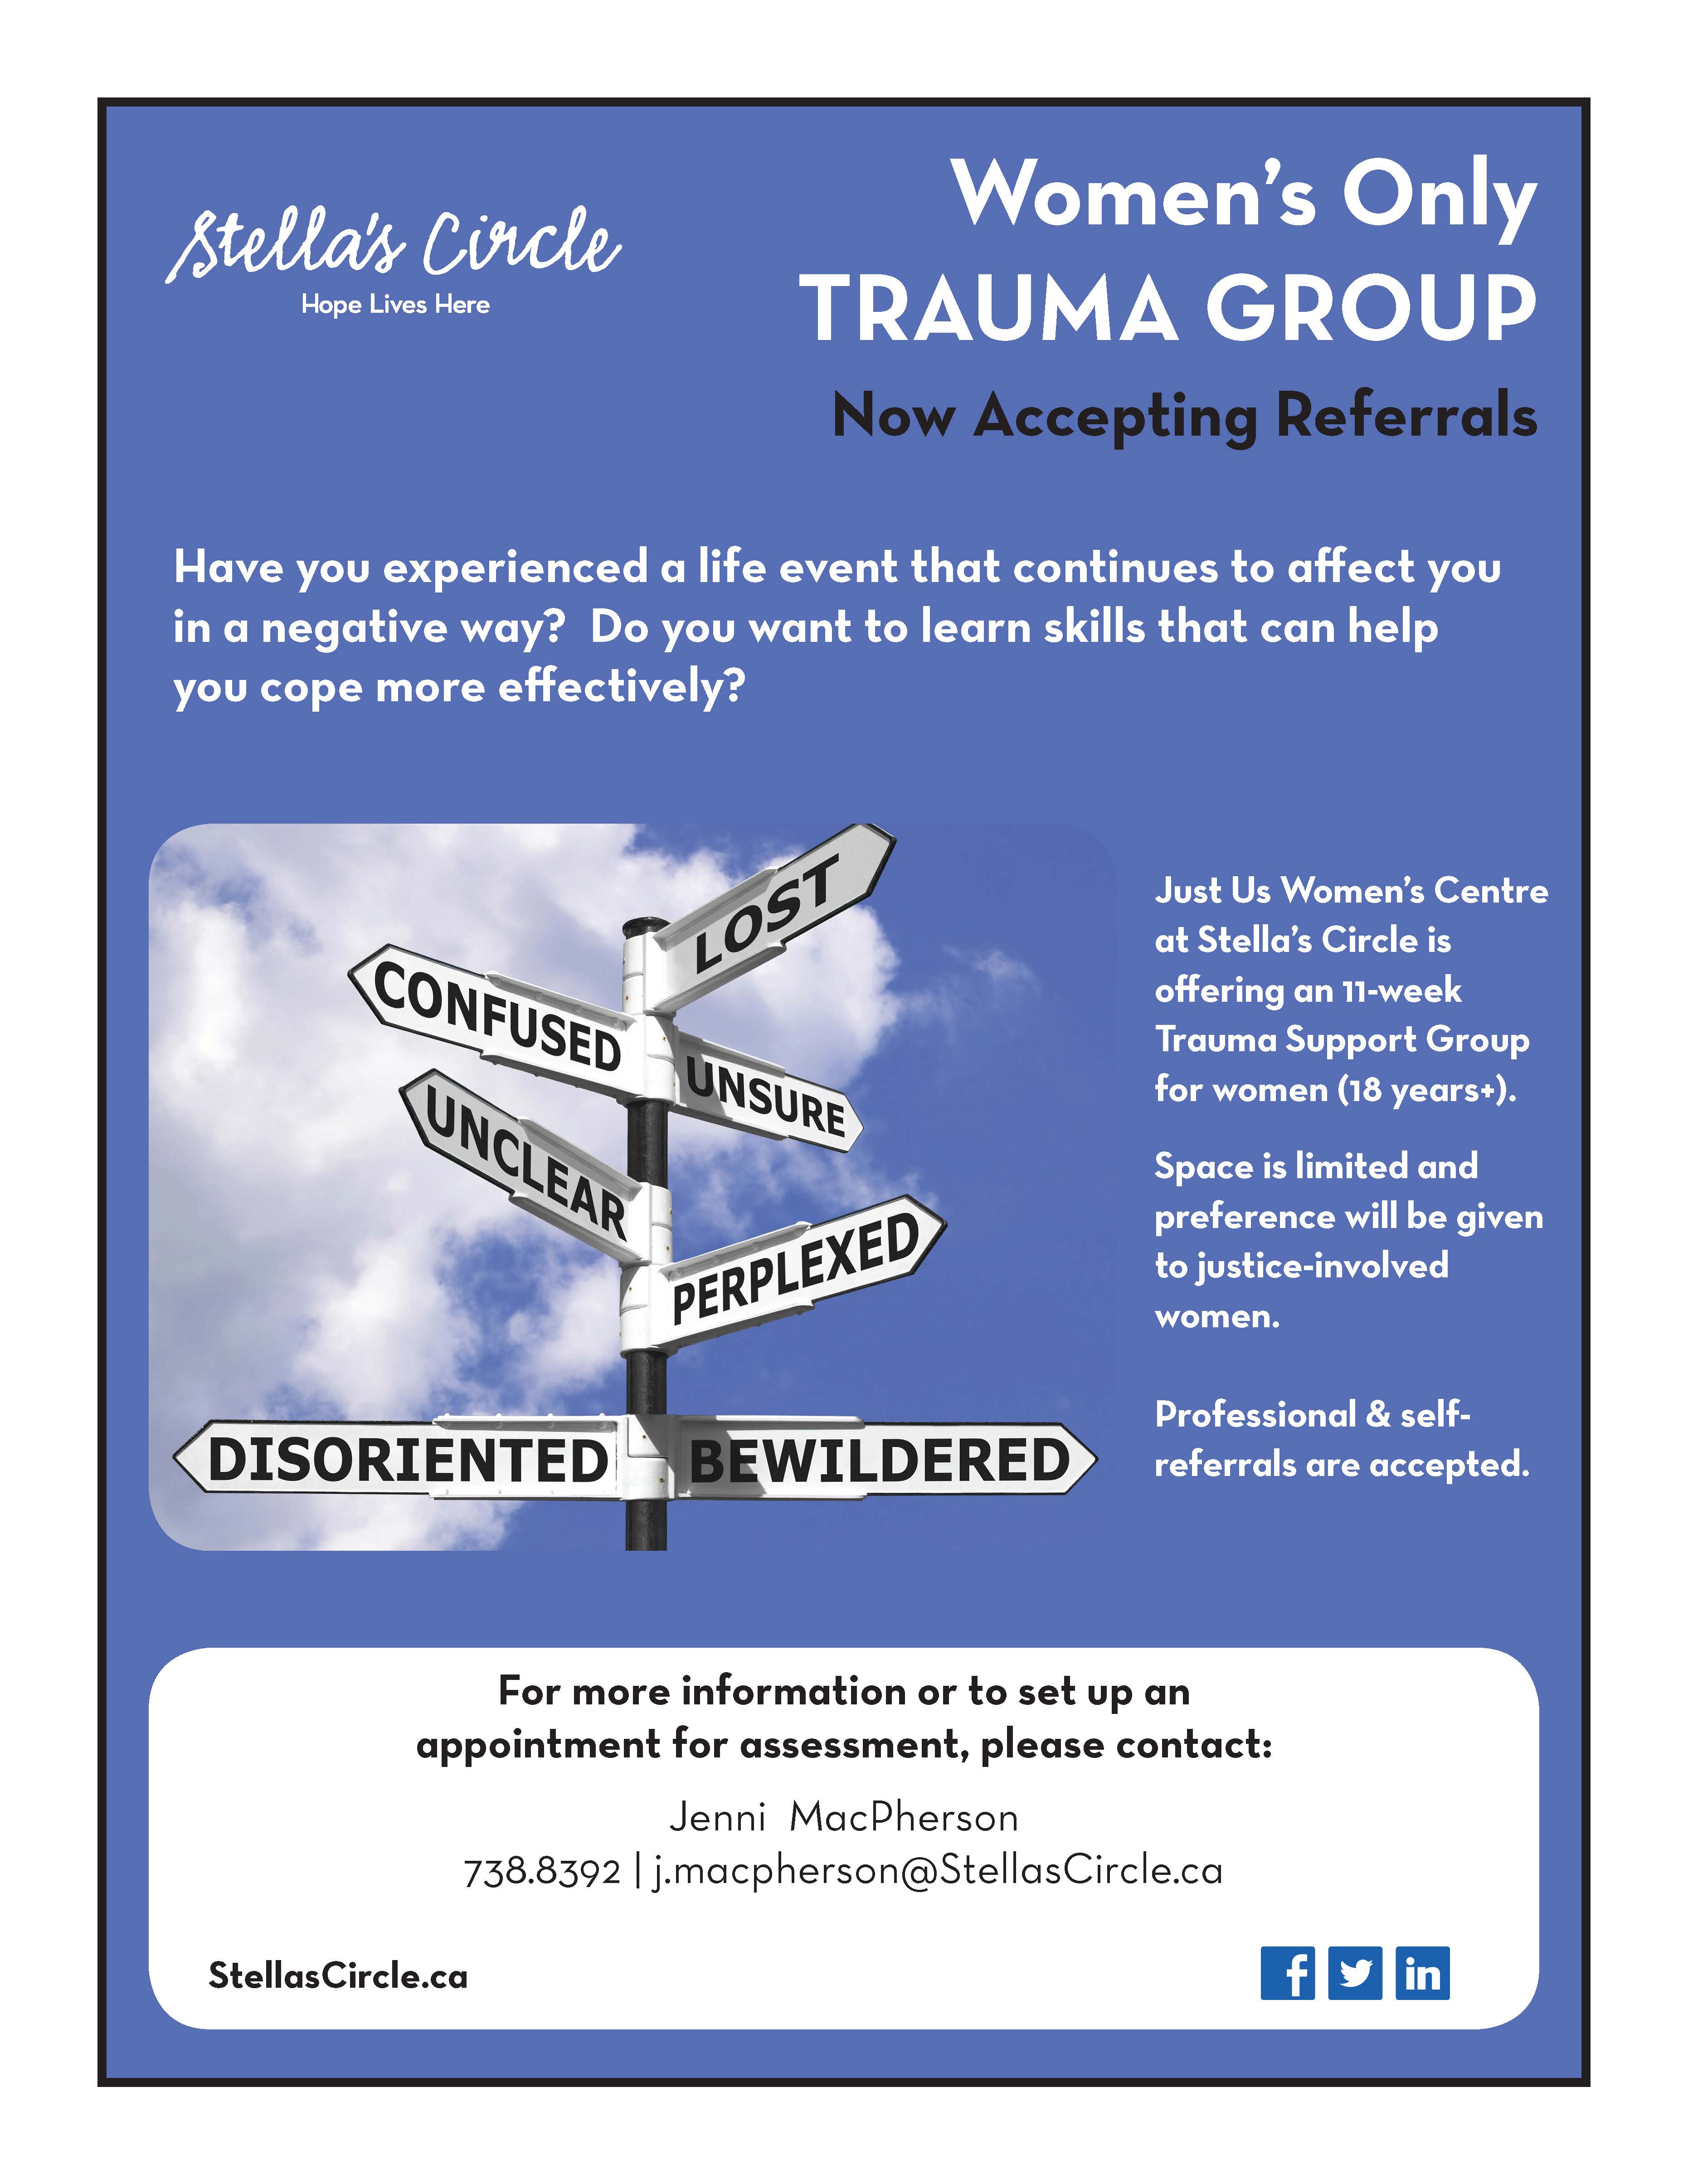 Trauma Group for Women - Stella's Circle